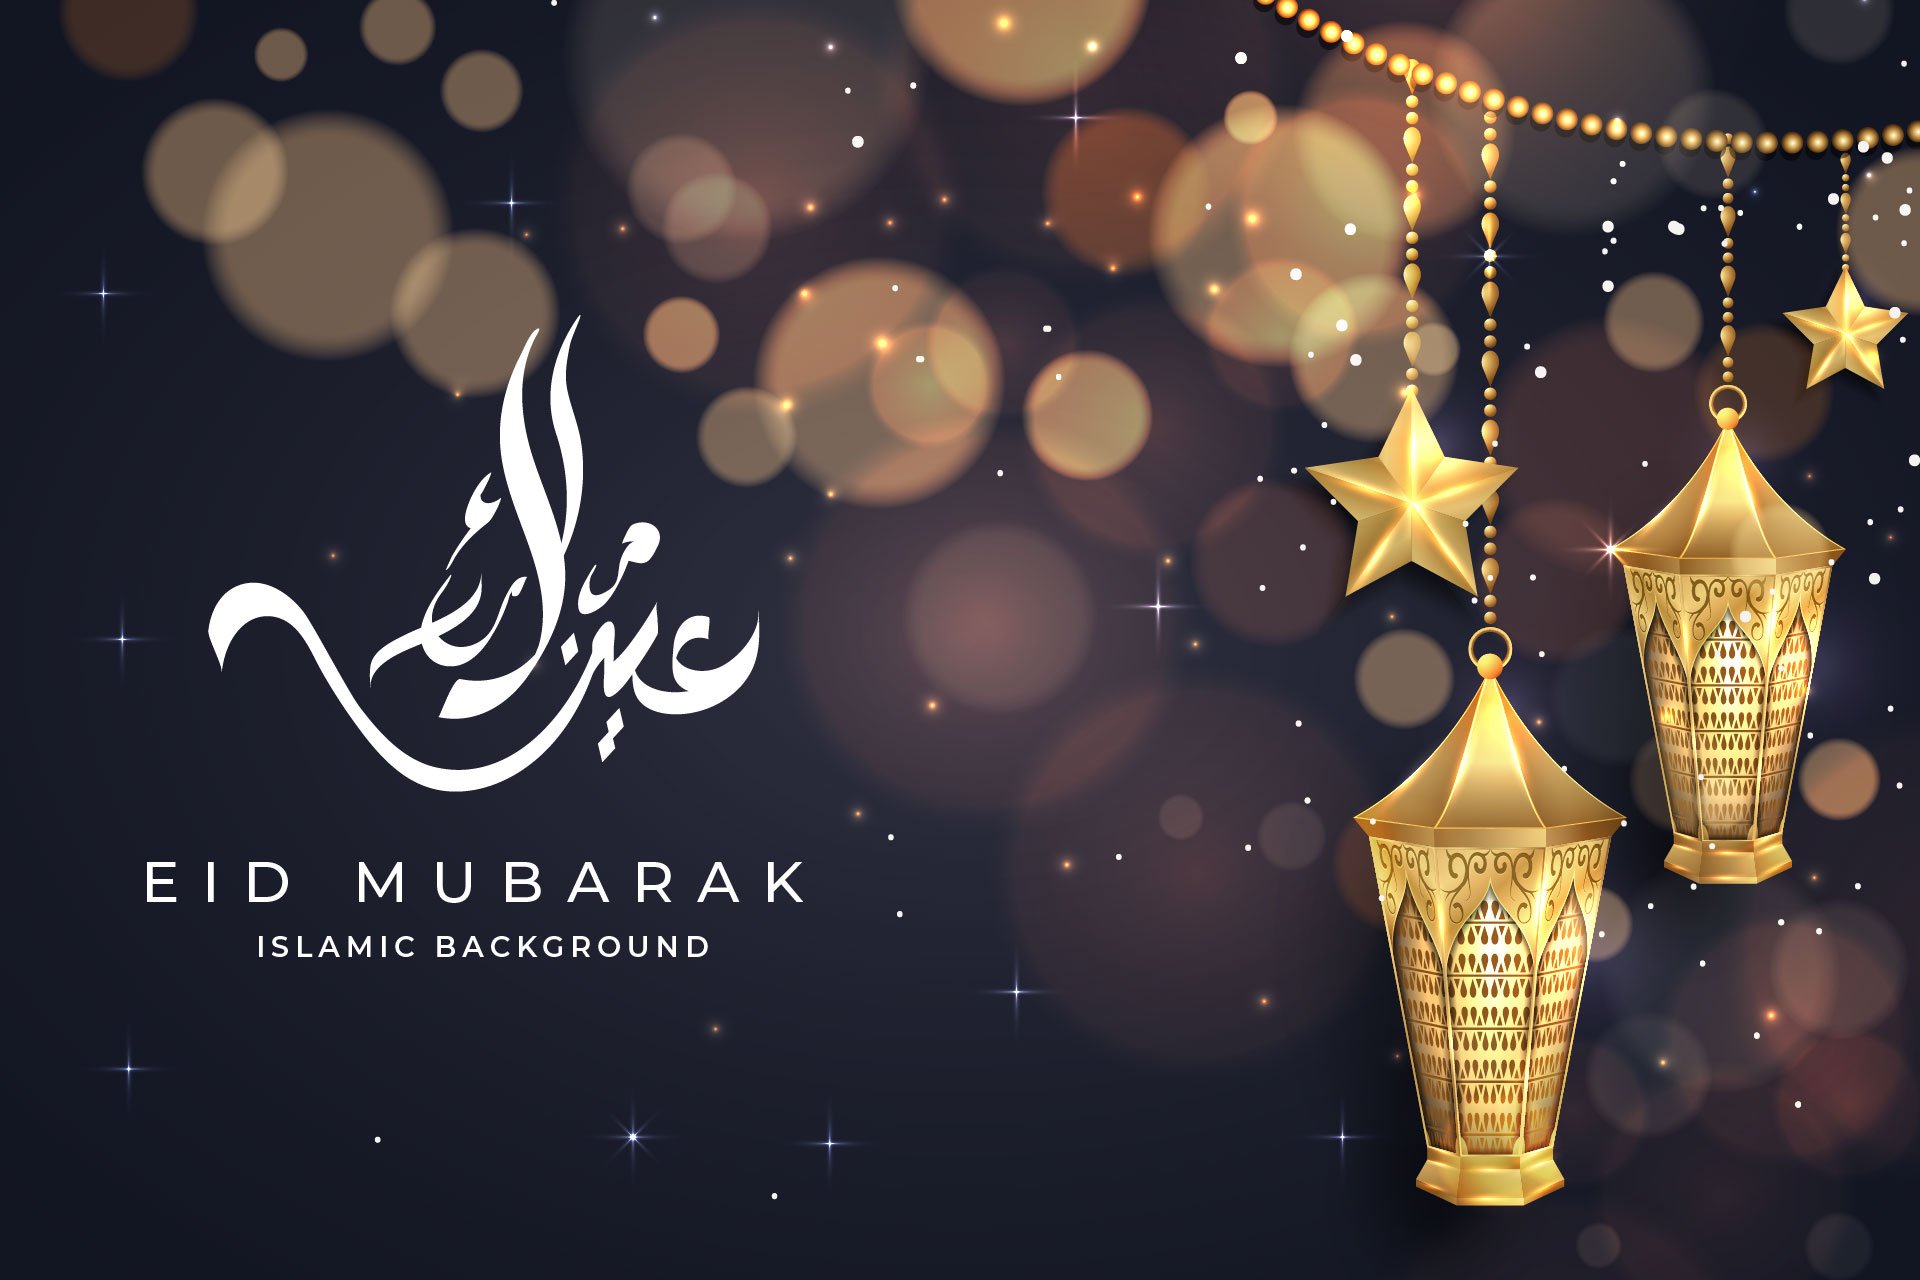 Eid Mubarak Islamic Background by Saimon Kite on Dribbble